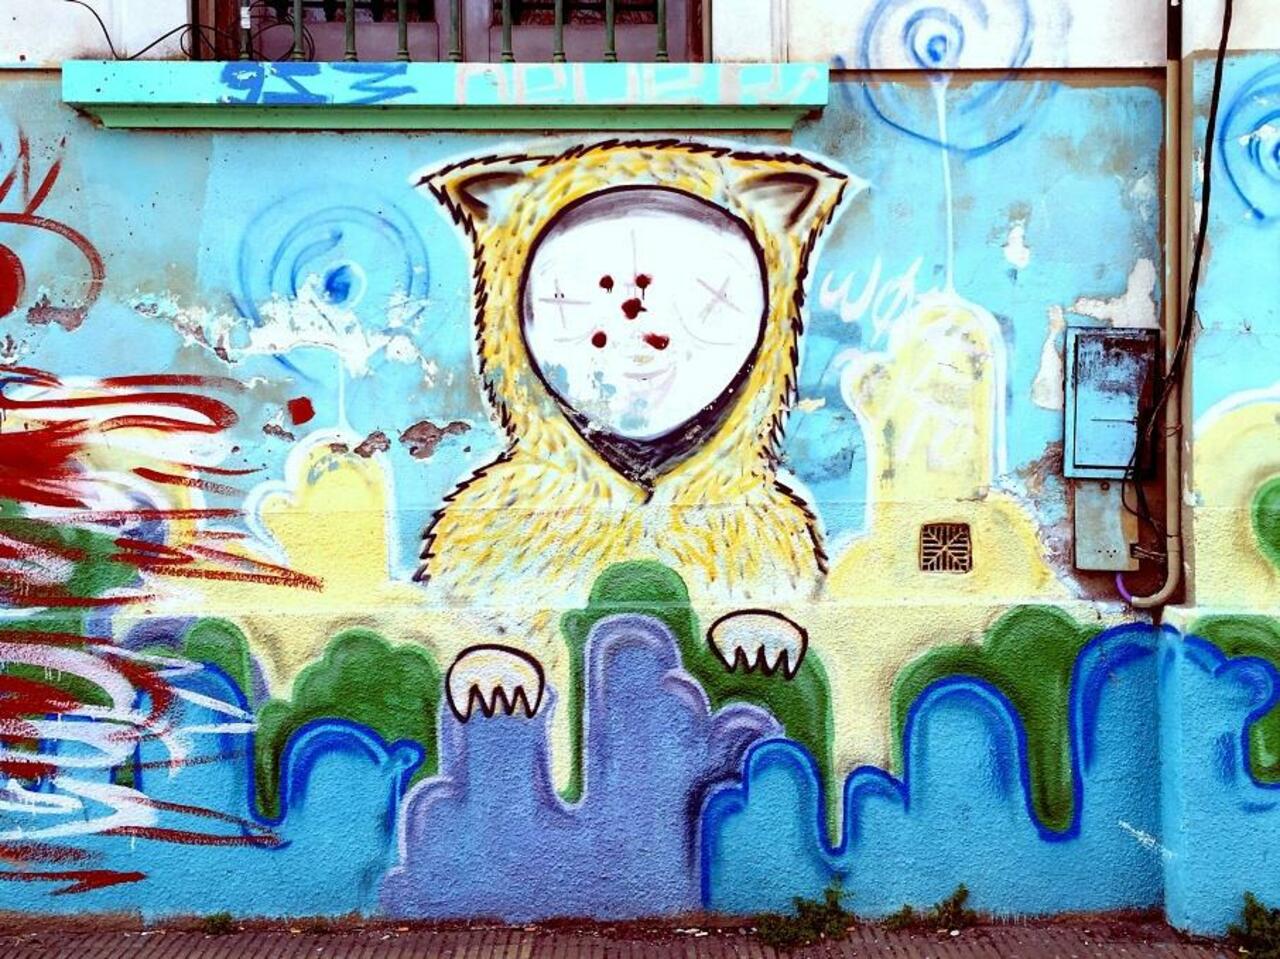 #Graffiti de hoy: << El disfraz de oso >> calle 66 8y9 #LaPlata #Argentina #StreetArt #UrbanArt #ArteUrbano http://t.co/n9ml1PTR4v